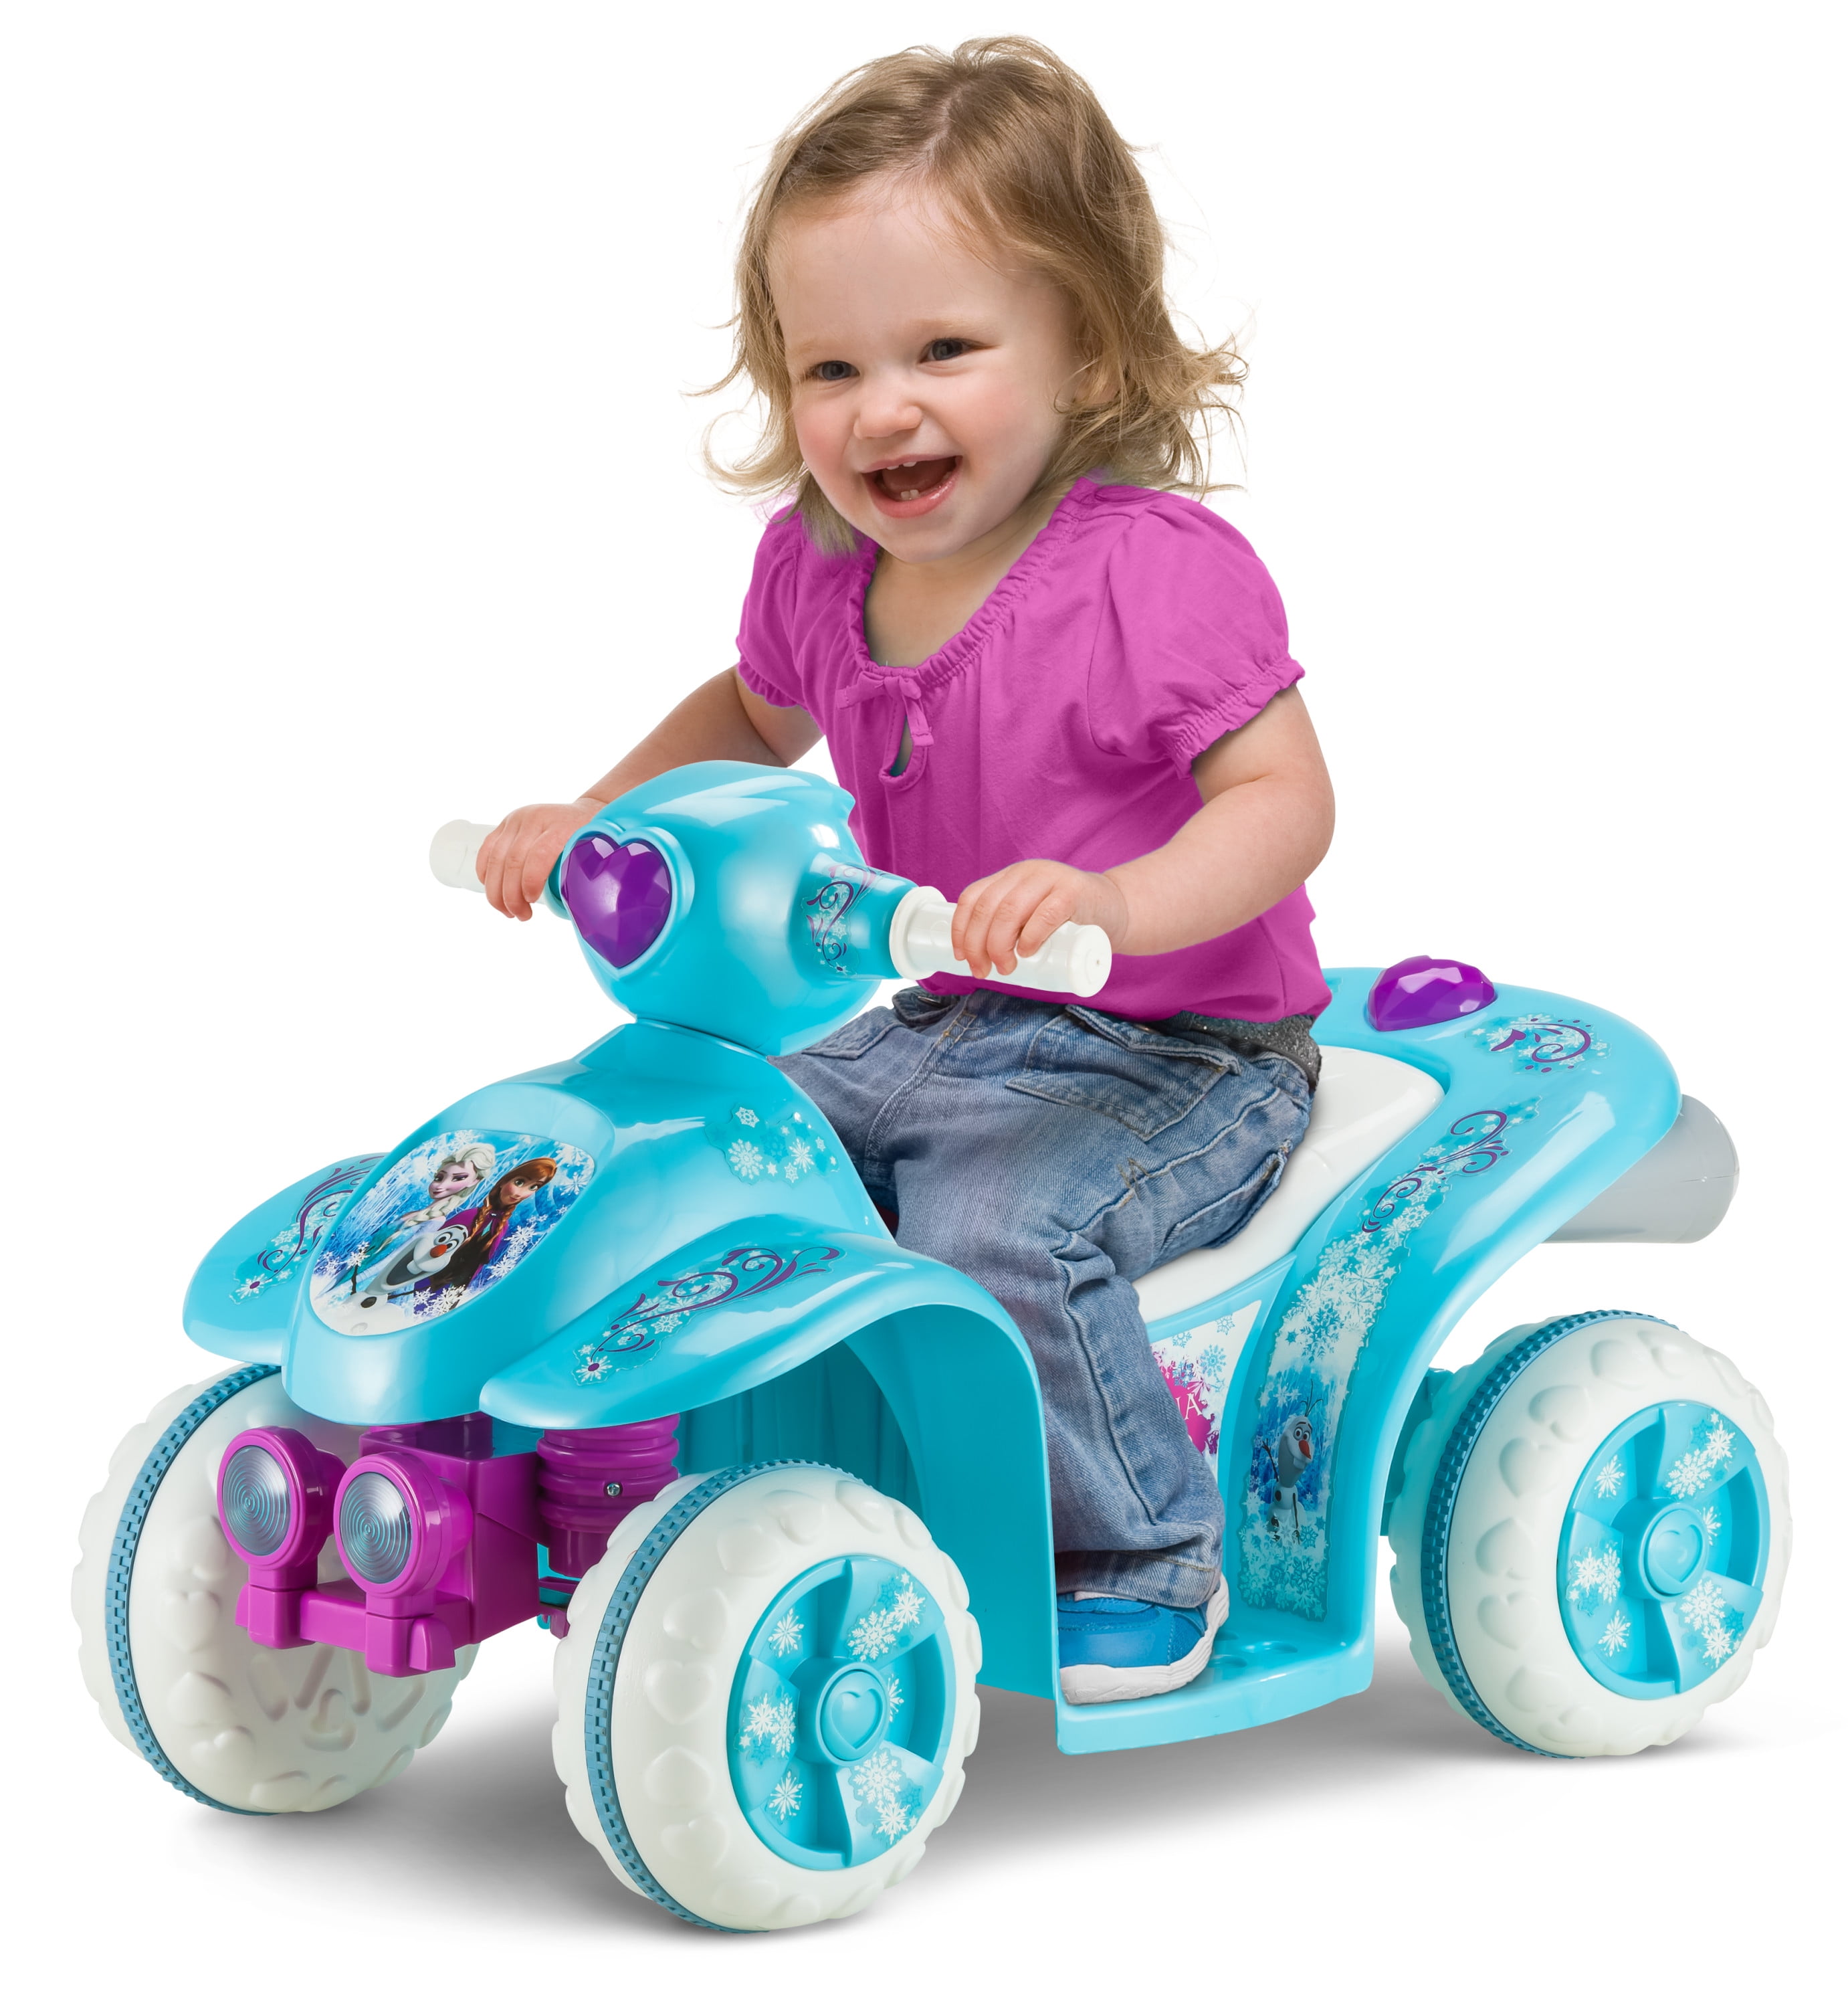 little kids riding toys